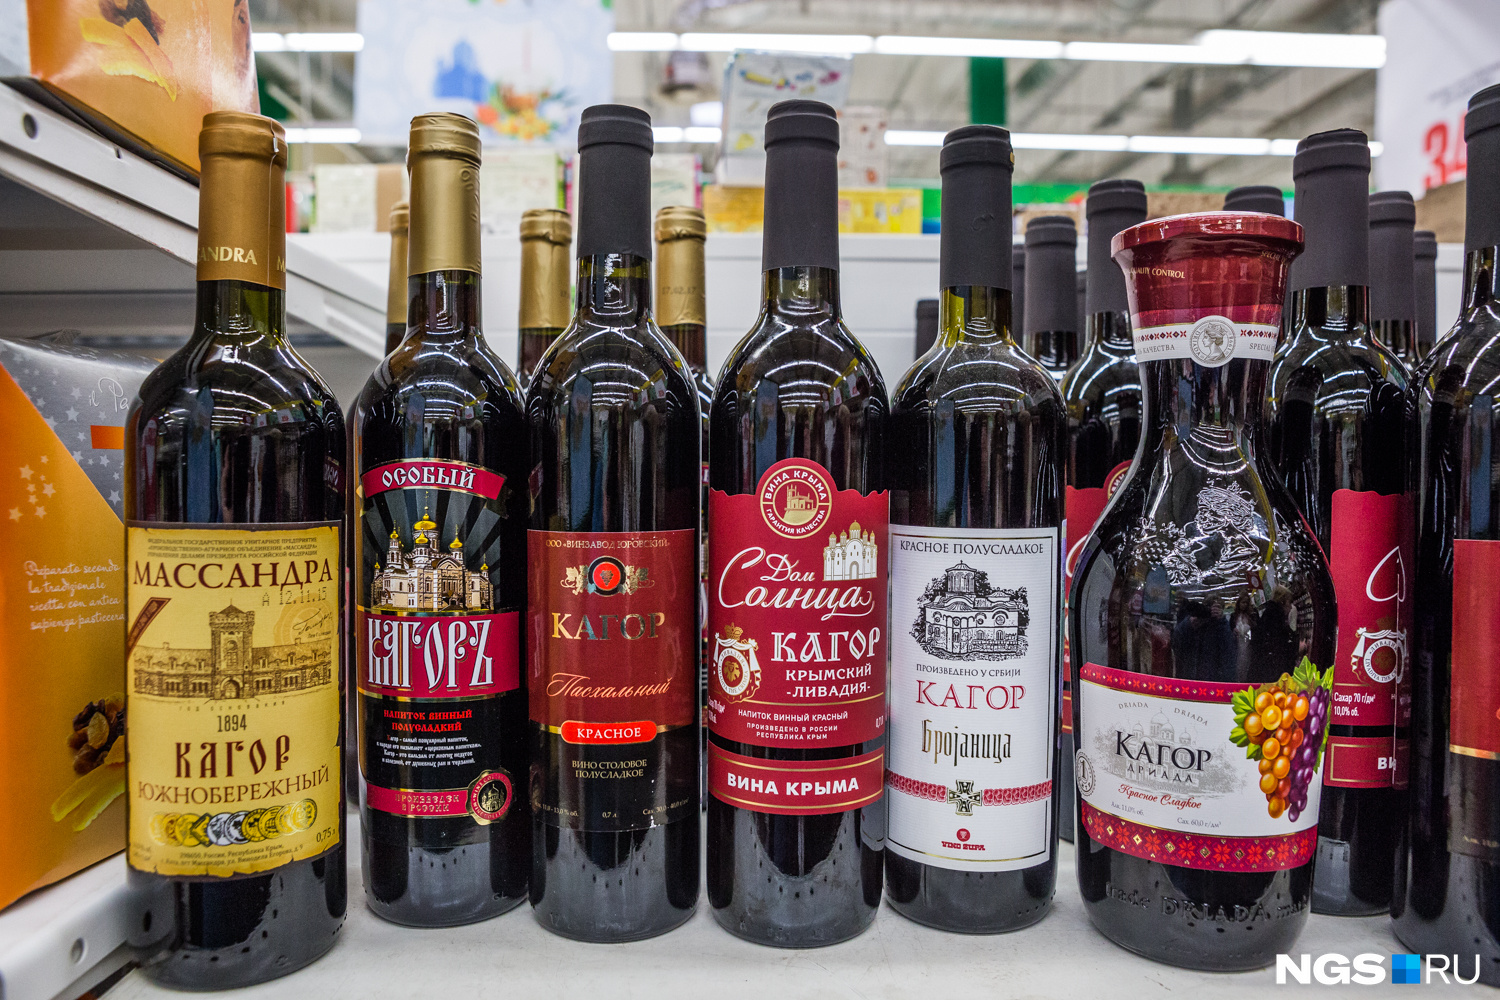 Вино кагор сколько. Вино кагор красное. Кагор Херес крепленое вино. Вино кагор российское крепленое. Кагор (креплёное вино).